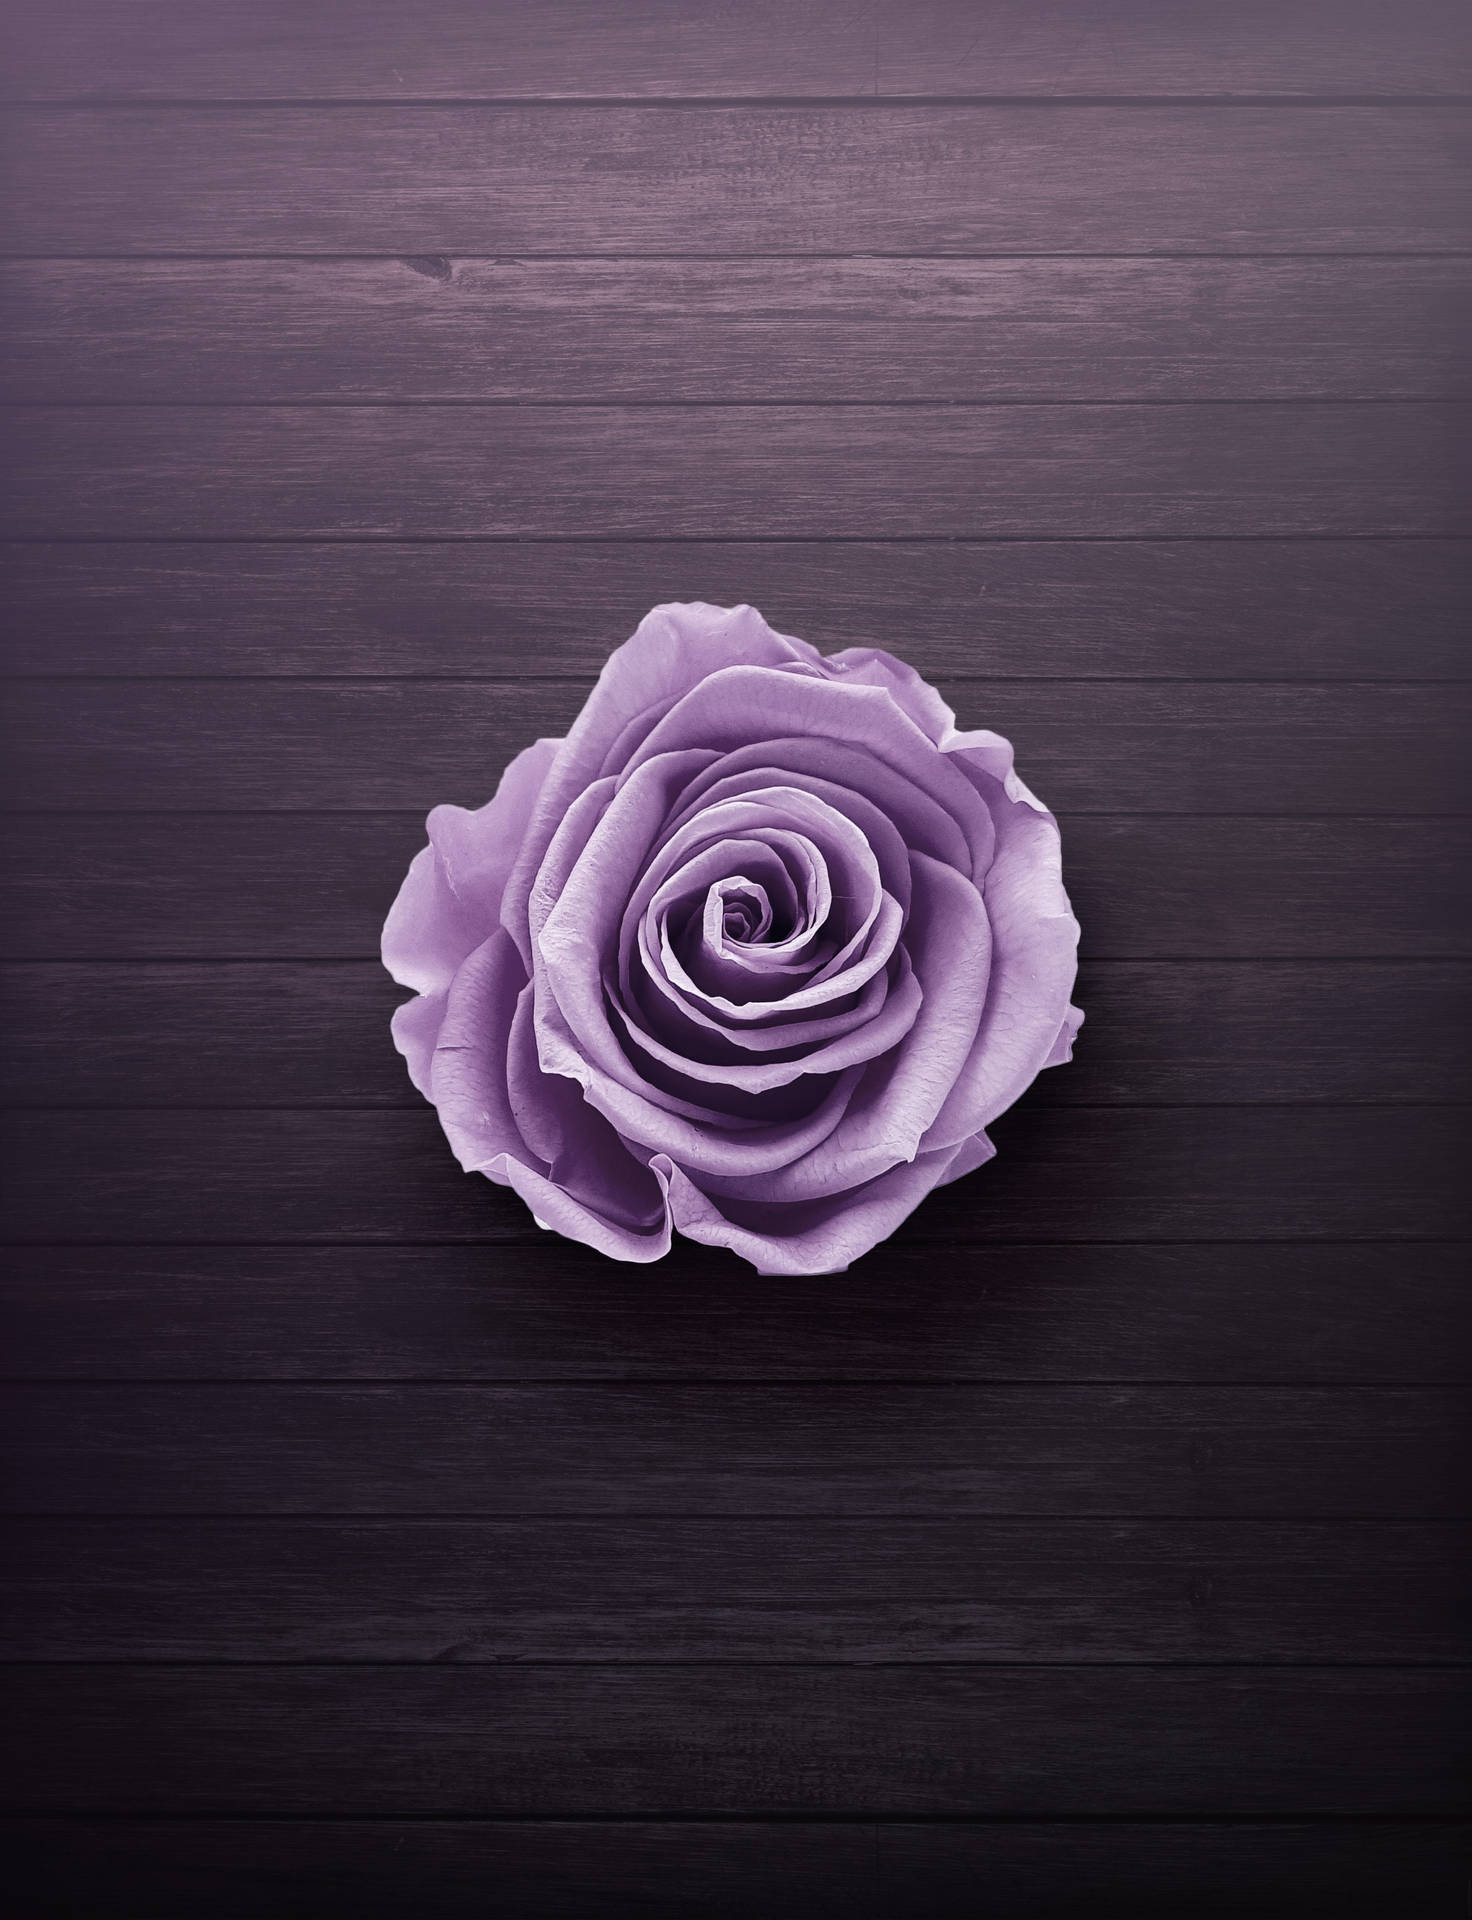 Rose On Wood Neon Purple Iphone Background